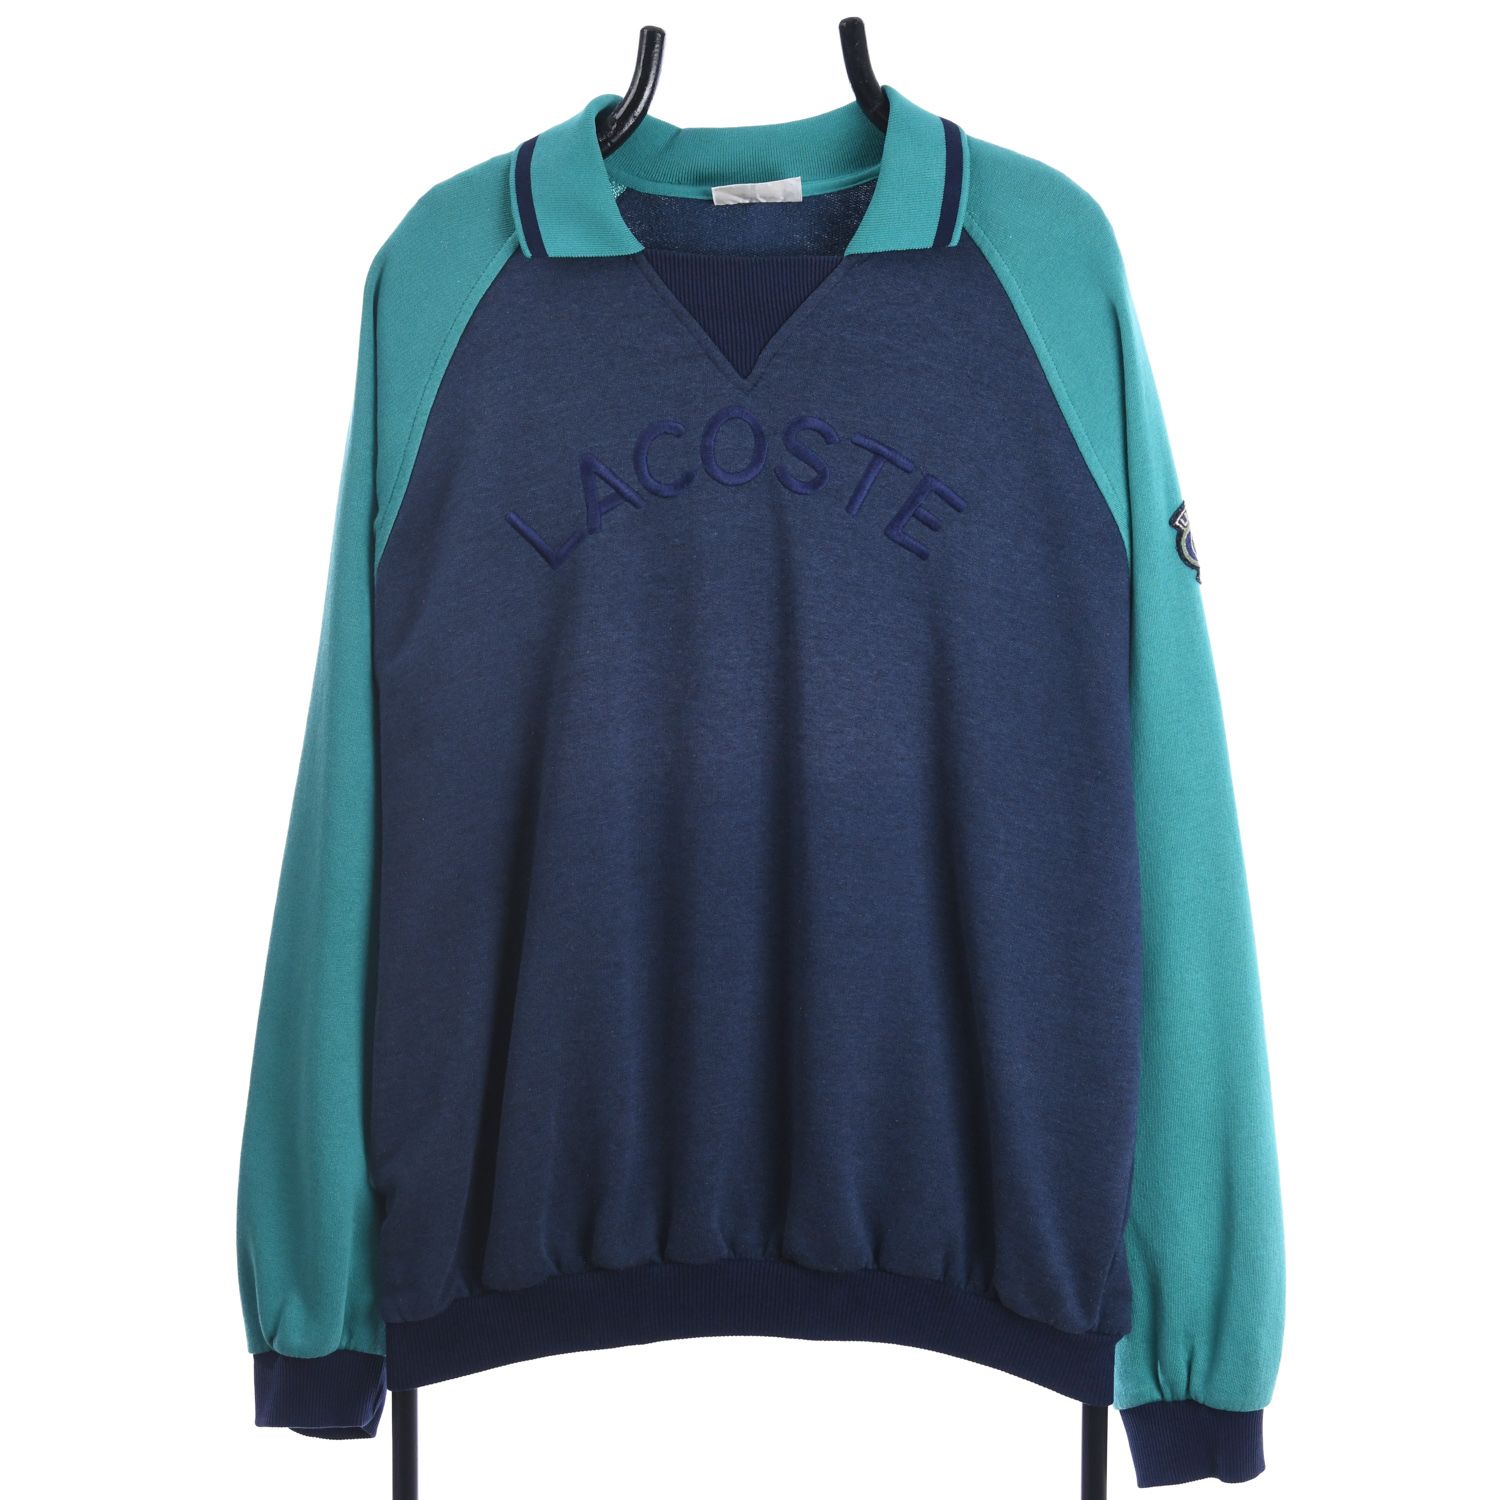 Lacoste Club 1980s Collared Sweatshirt